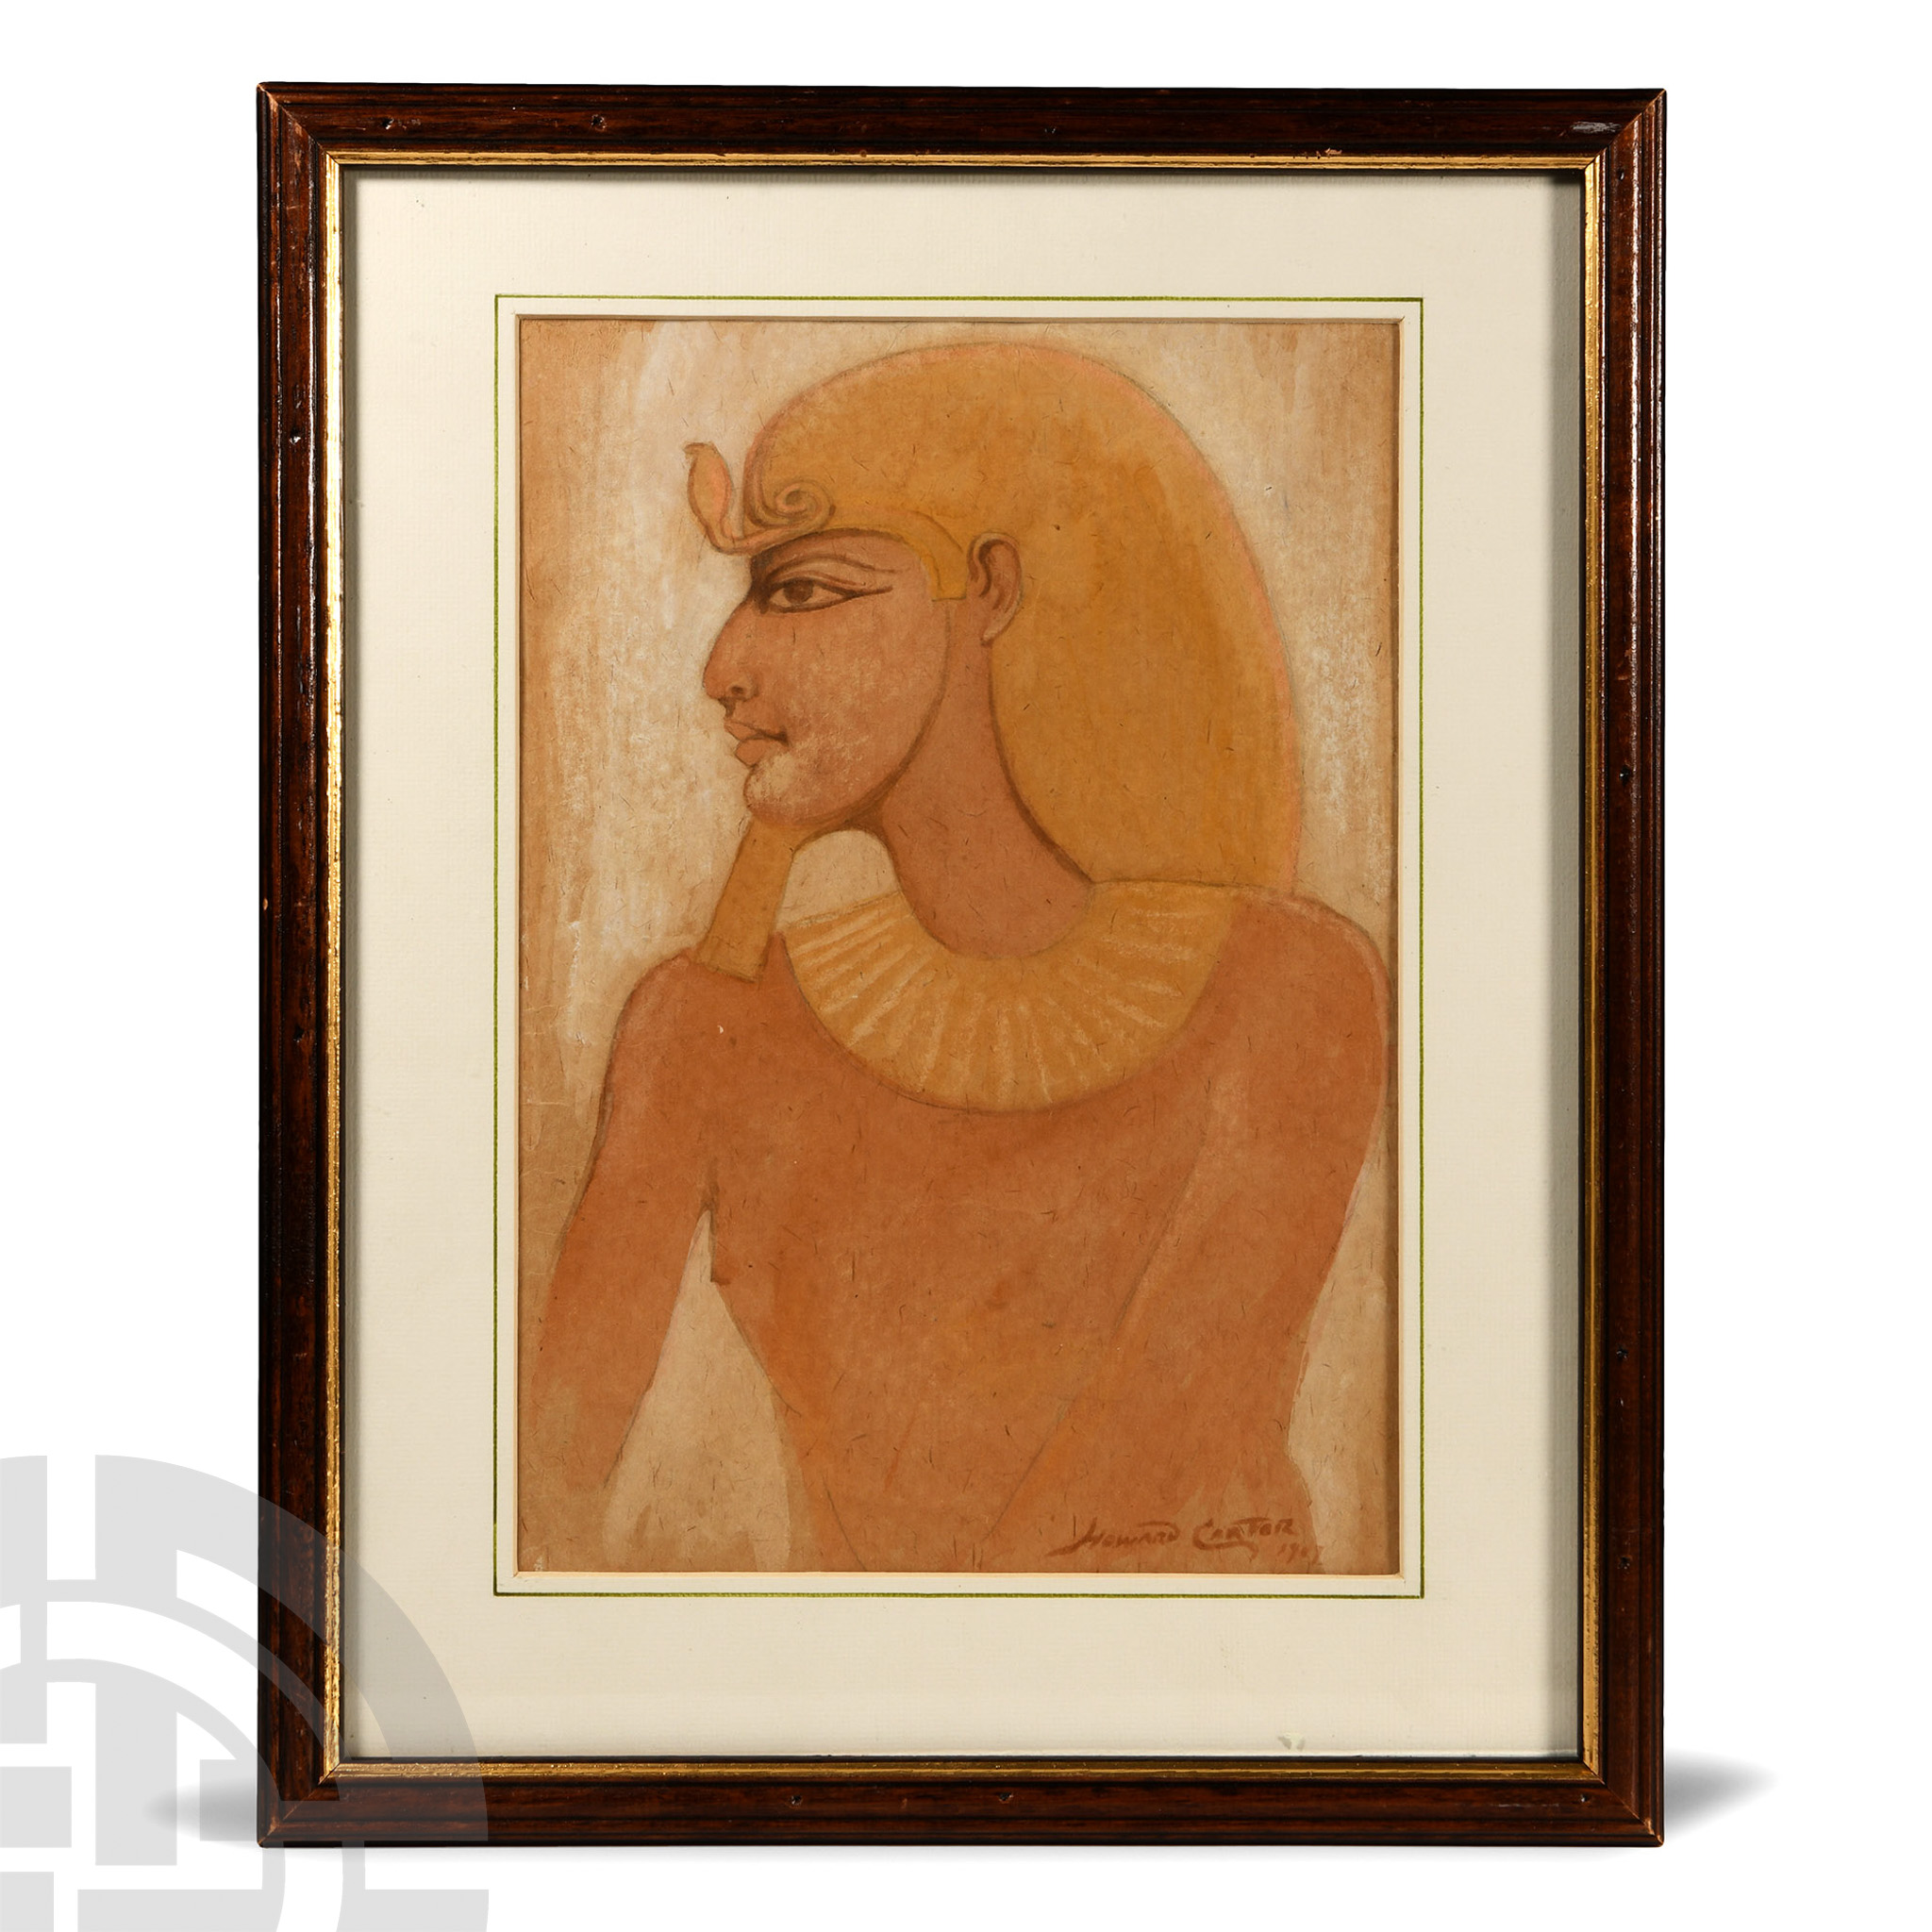 Egyptian Pharaoh Watercolour Attributed to Howard Carter